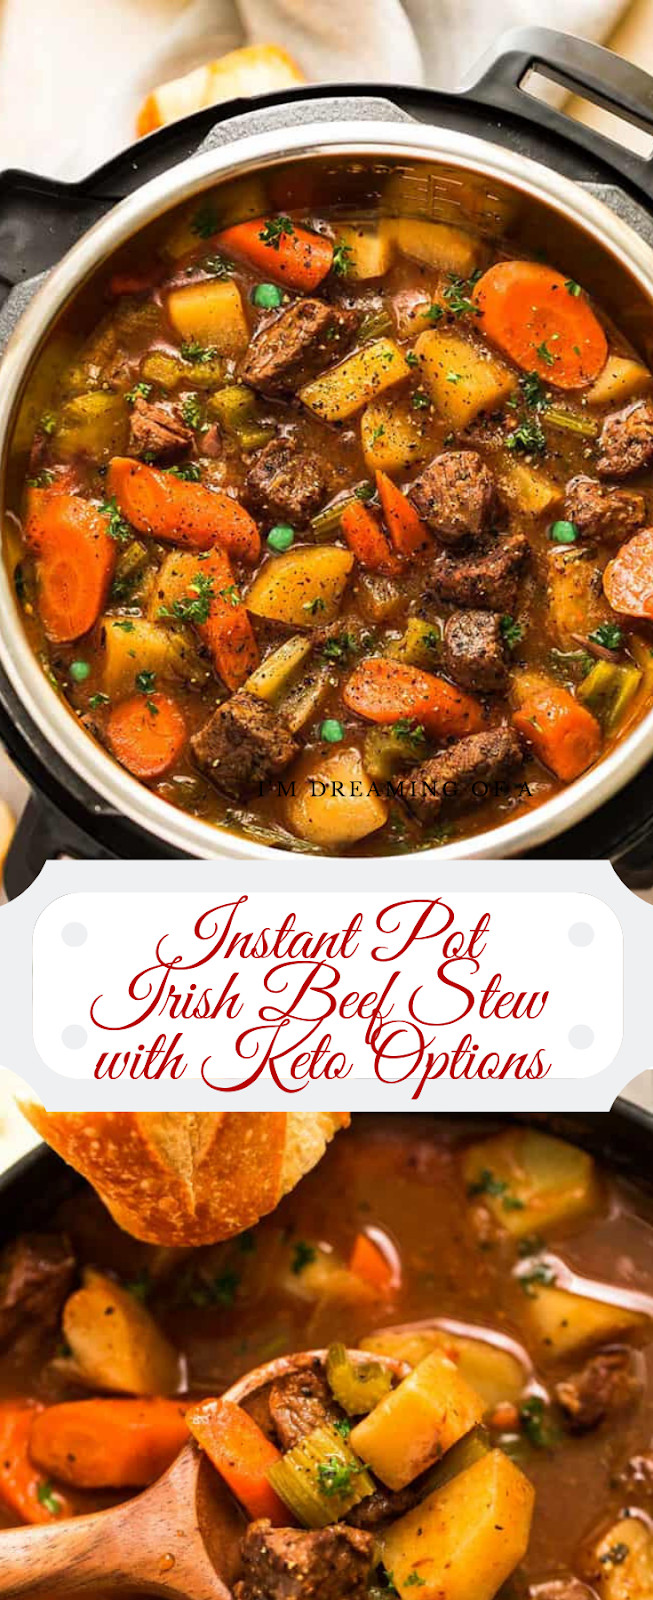 Instapot Keto Stew
 Instant Pot Irish Beef Stew – with Keto Options